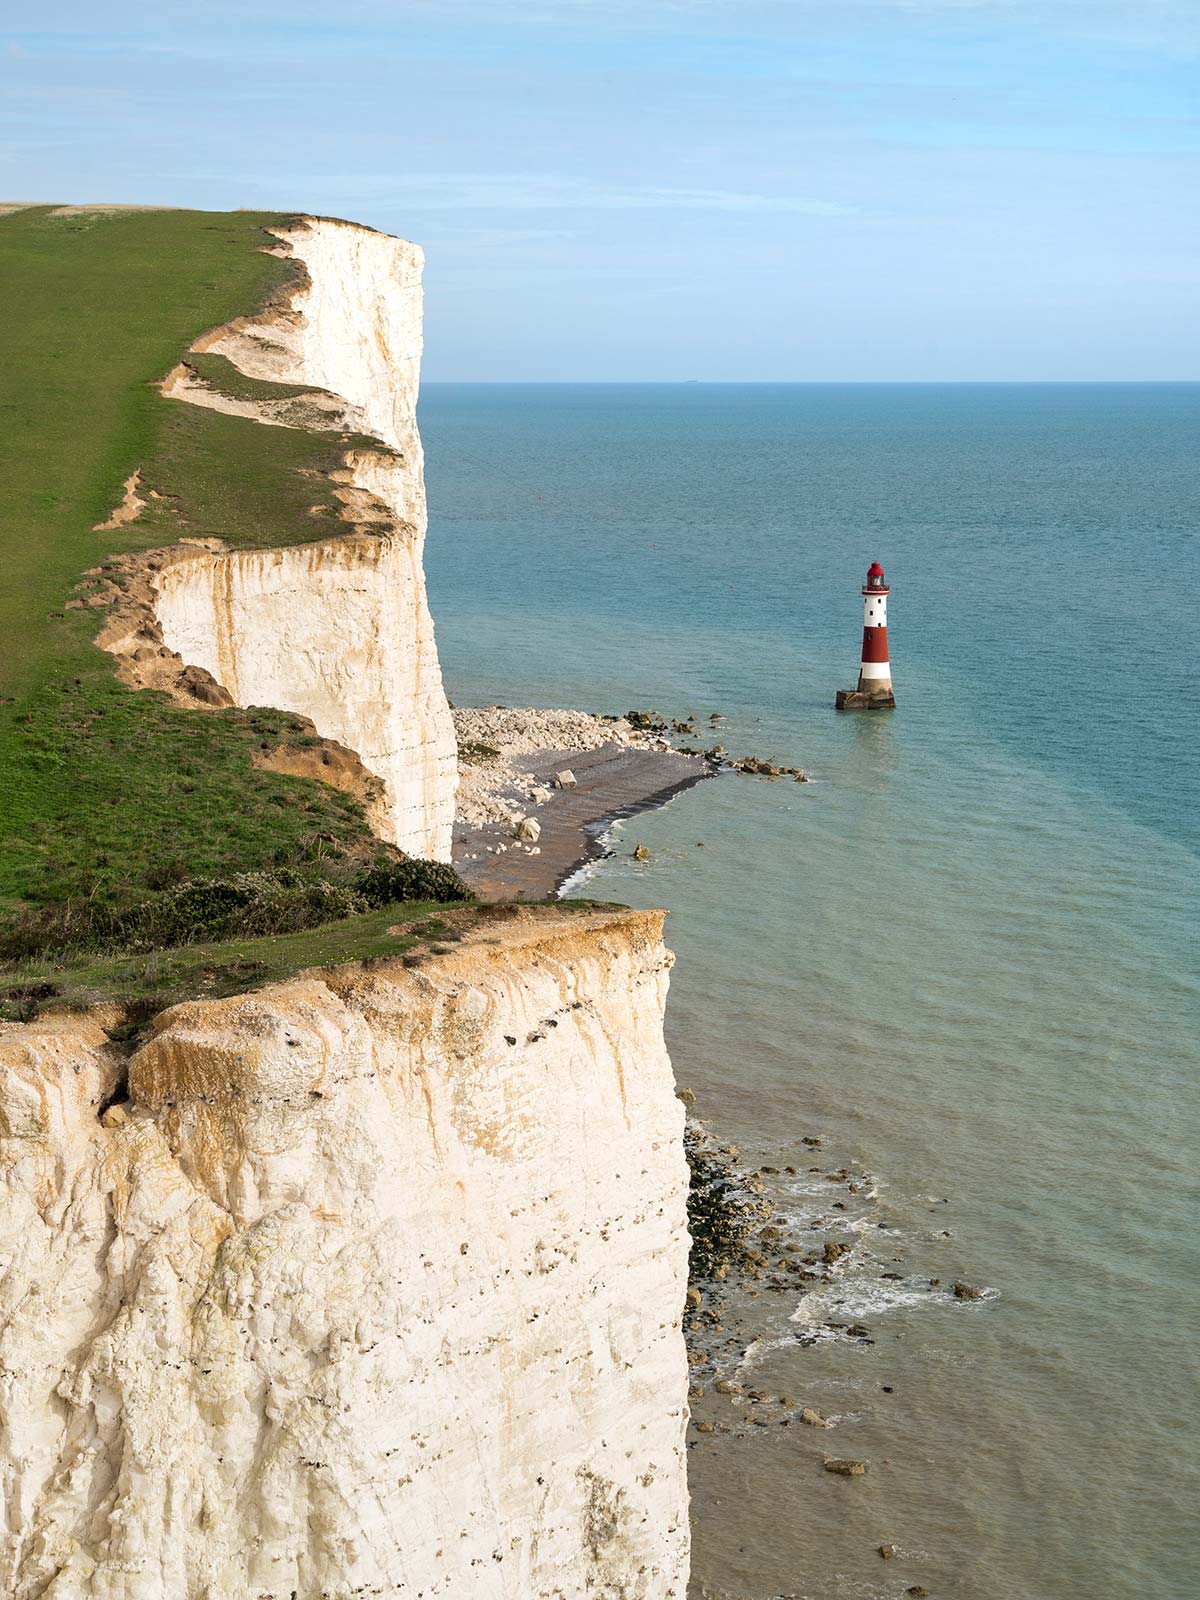 Falaises, Phare de Beachy Head, Seven Sisters, East Sussex, Angleterre, Royaume-Uni / Cliffs, Beachy Head Lighthouse, Seven Sisters, East Sussex, England, UK